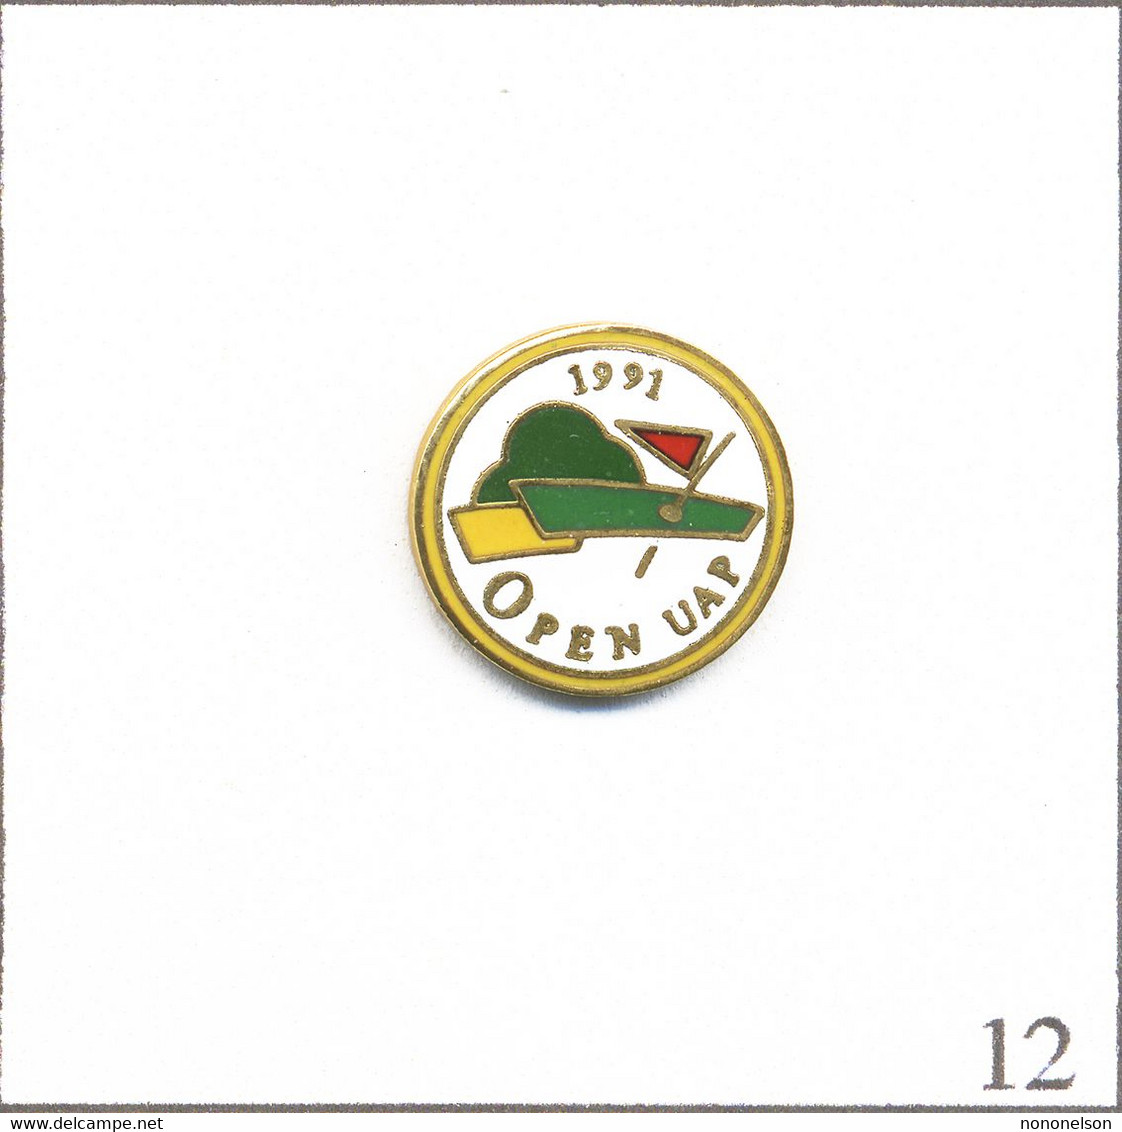 Pin's Banque Et Assurance - Sport / Golf “Open UAP“ 1991. Estampillé Punch. EGF. T883-12 - Golf